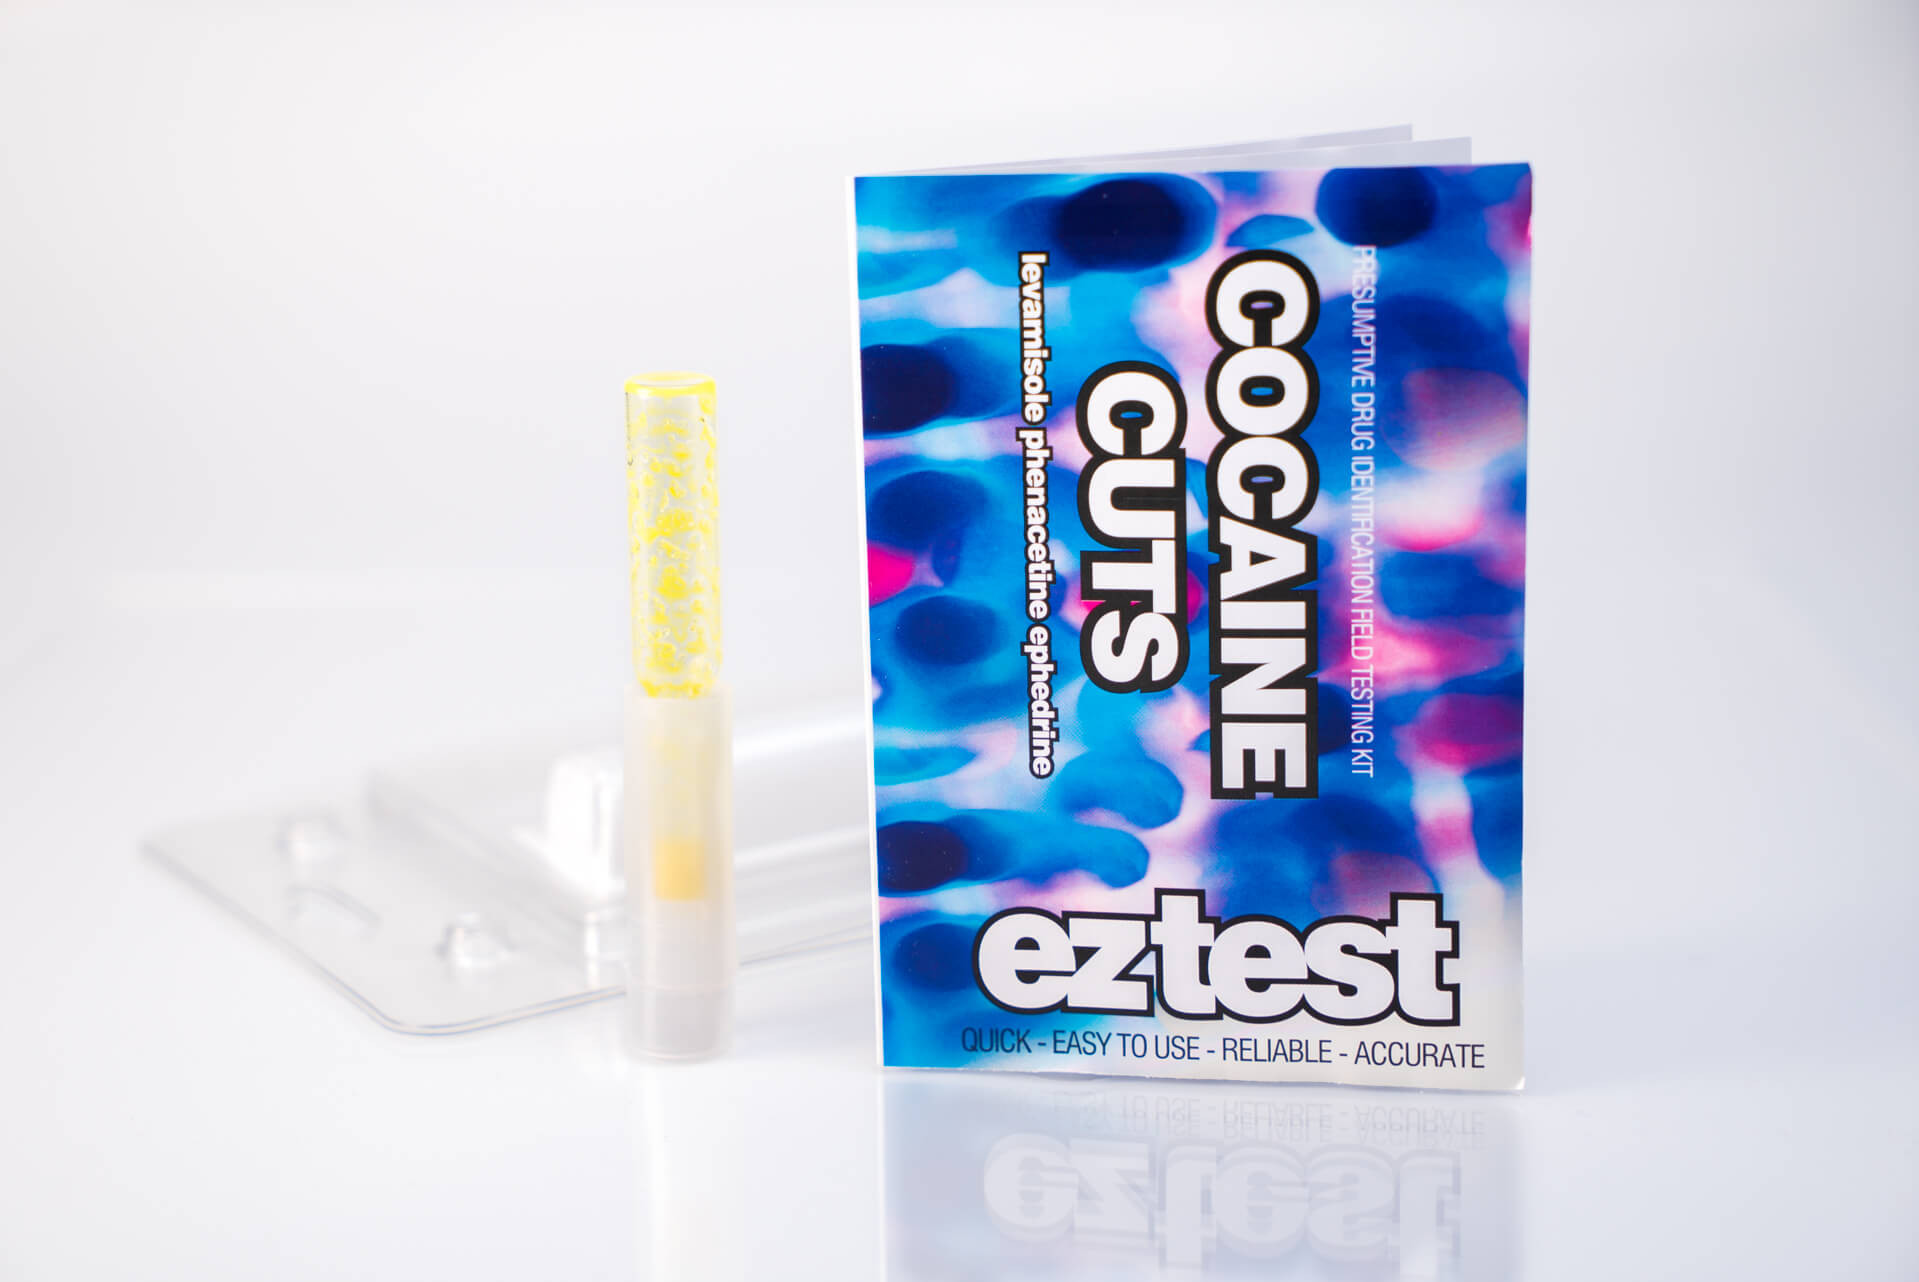 Cocaine Cuts Single Use Drug Testing Kit